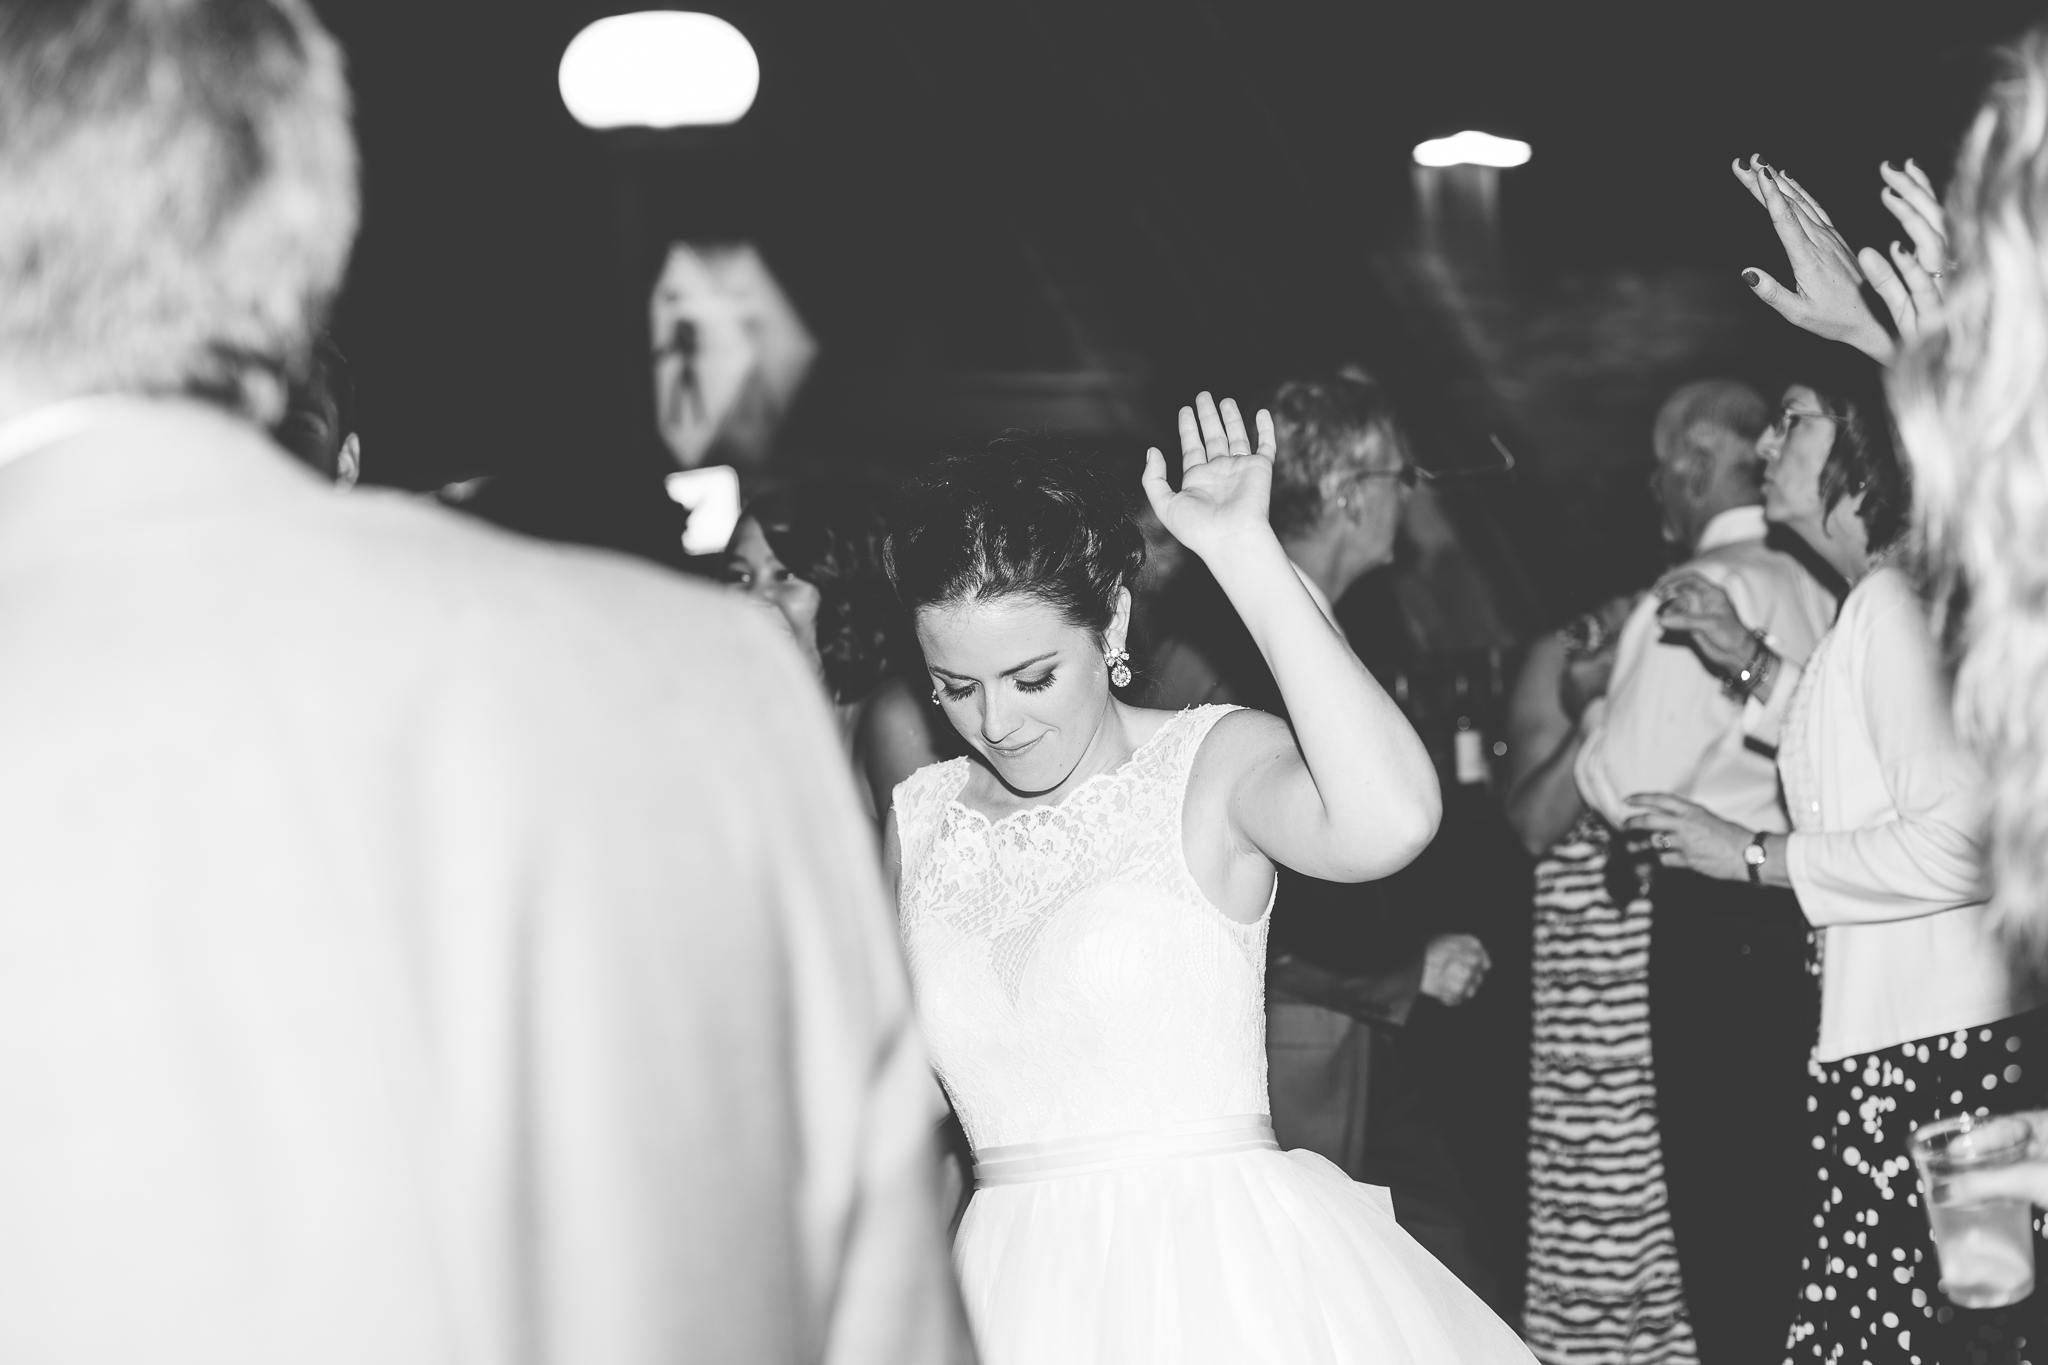 Coohills Wedding Photographer - dancing reception